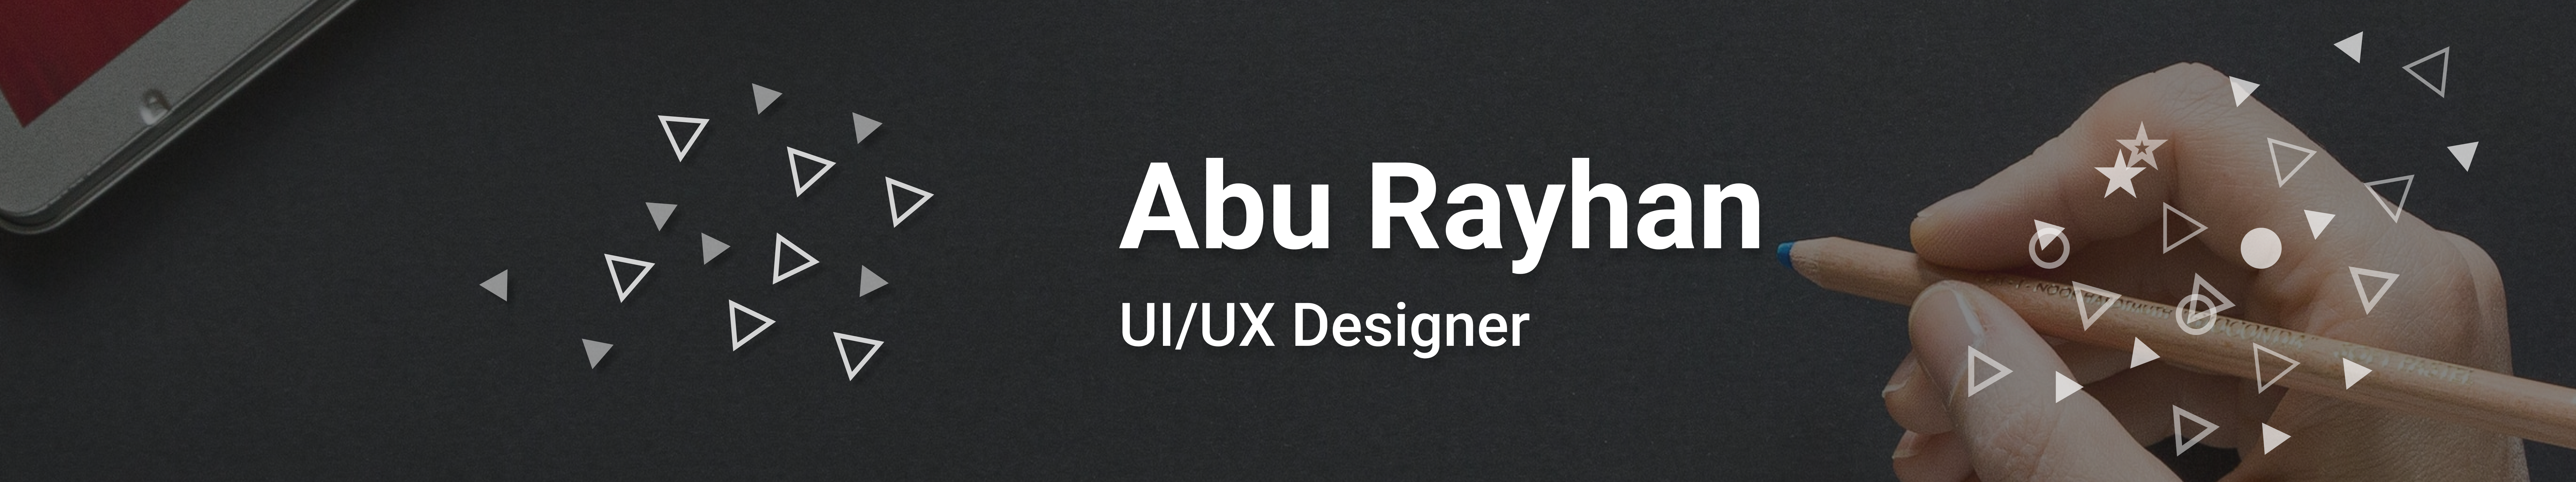 Abu Rayhan's profile banner